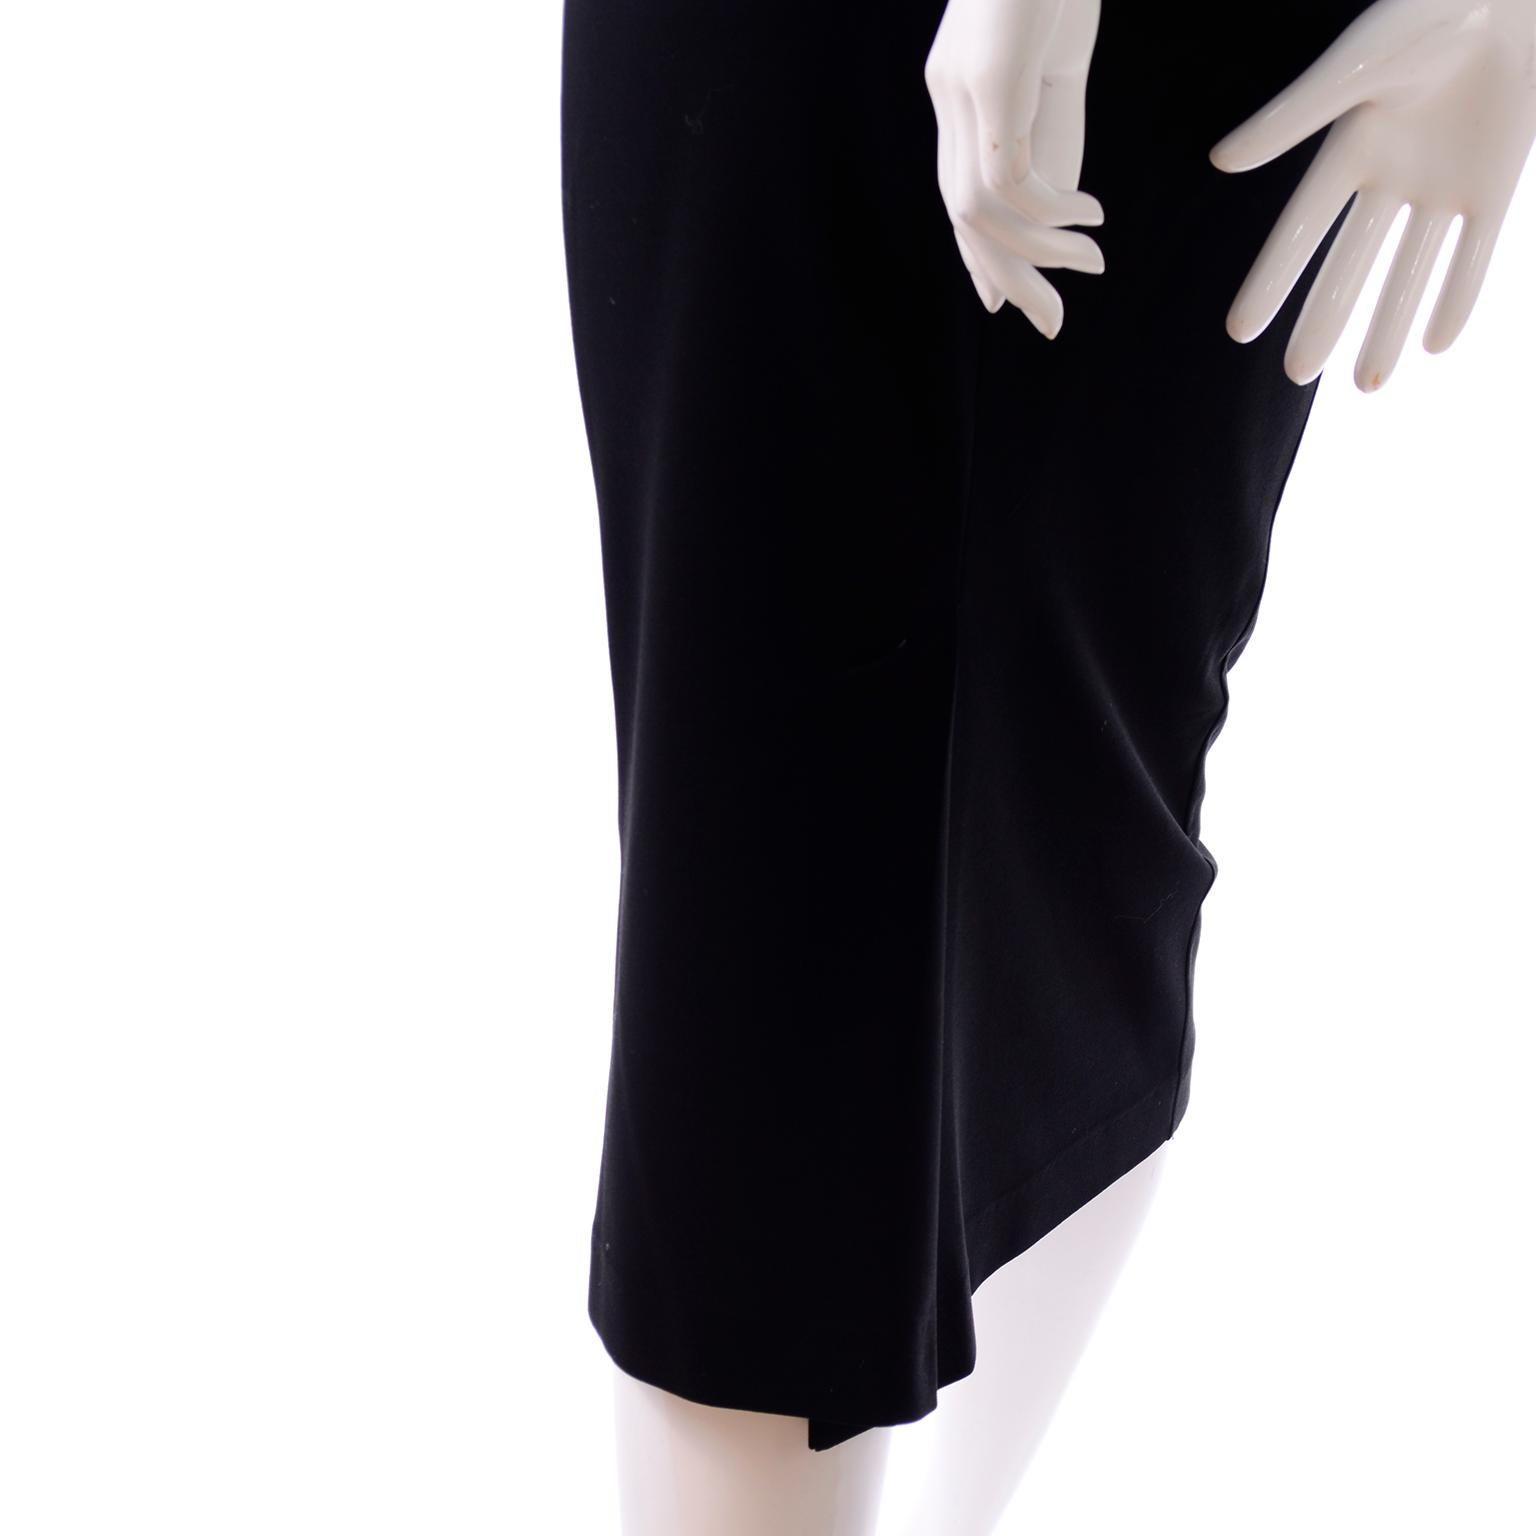 Dolce & Gabbana 2 Piece Dress With Black Corset Style Bustier & Pencil Skirt 4